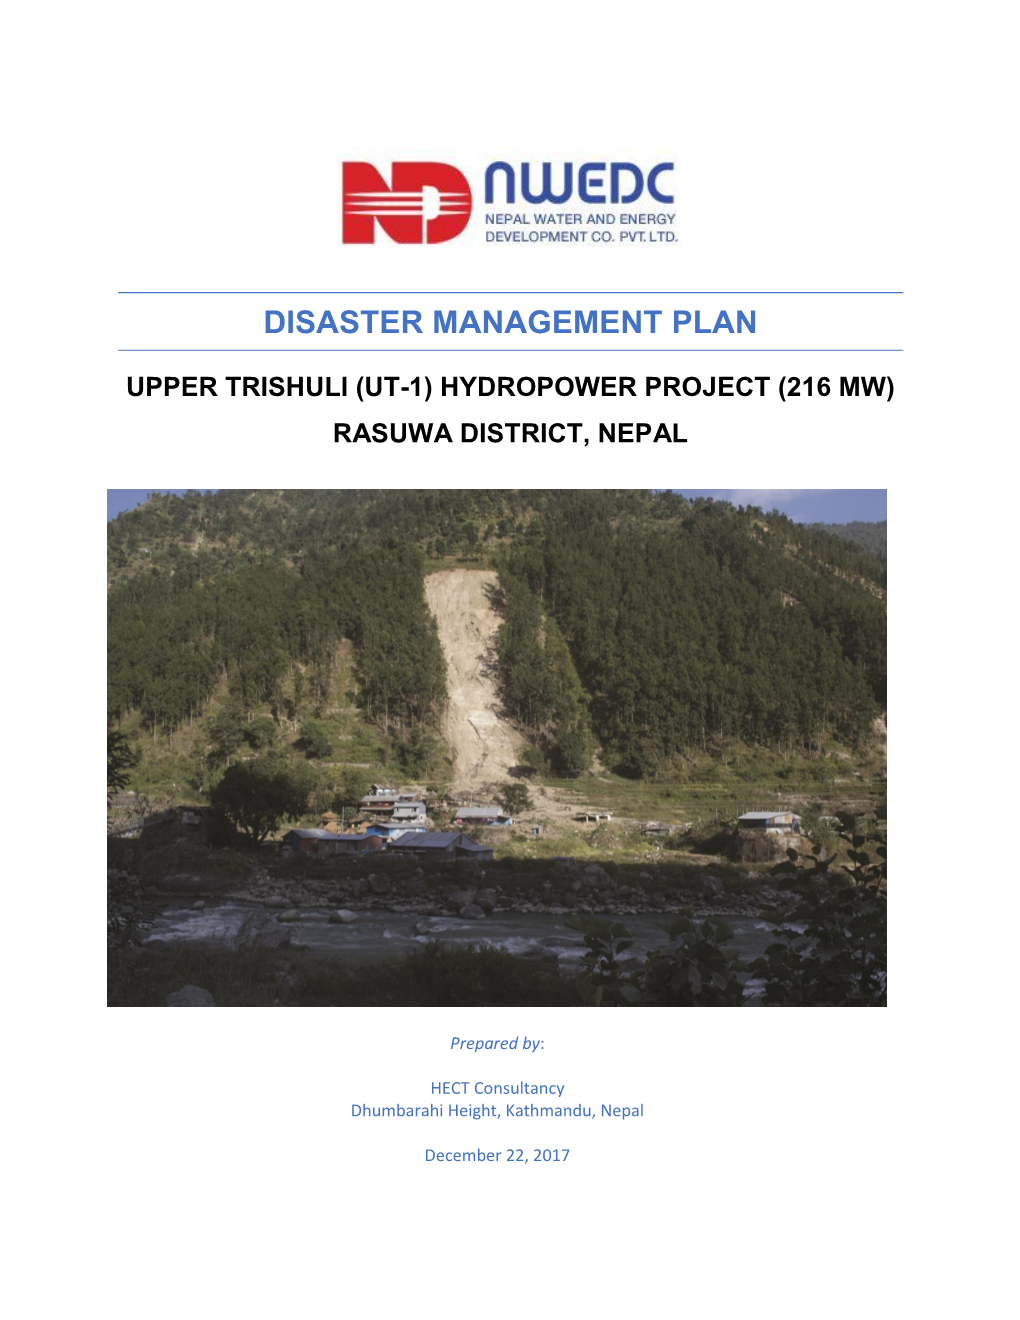 Disaster Management Plan